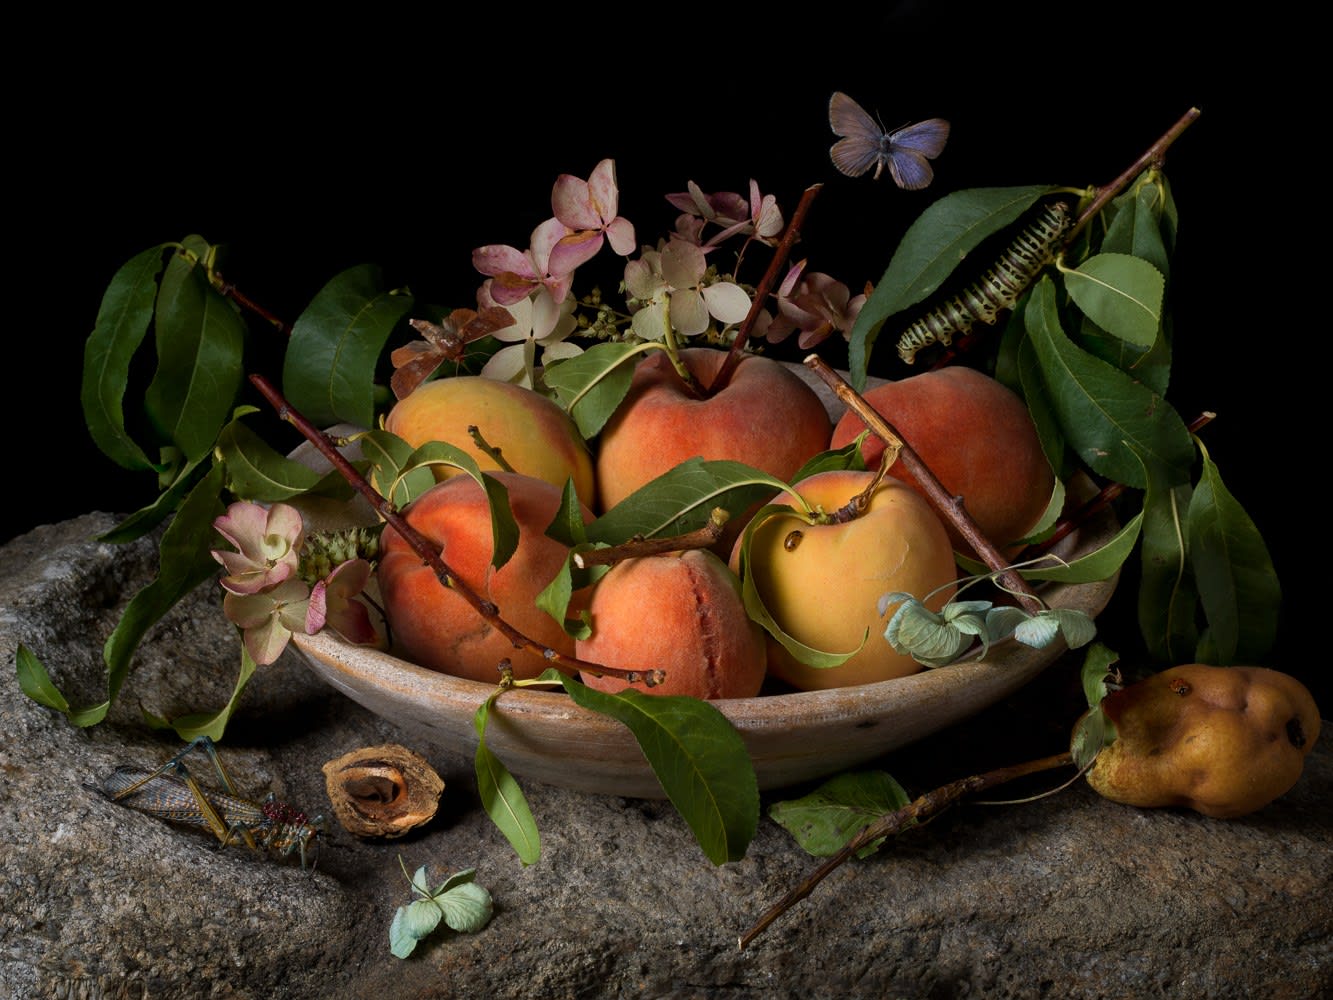 Paulette Tavormina, Peaches and Hydrangeas, After G.G., 2015